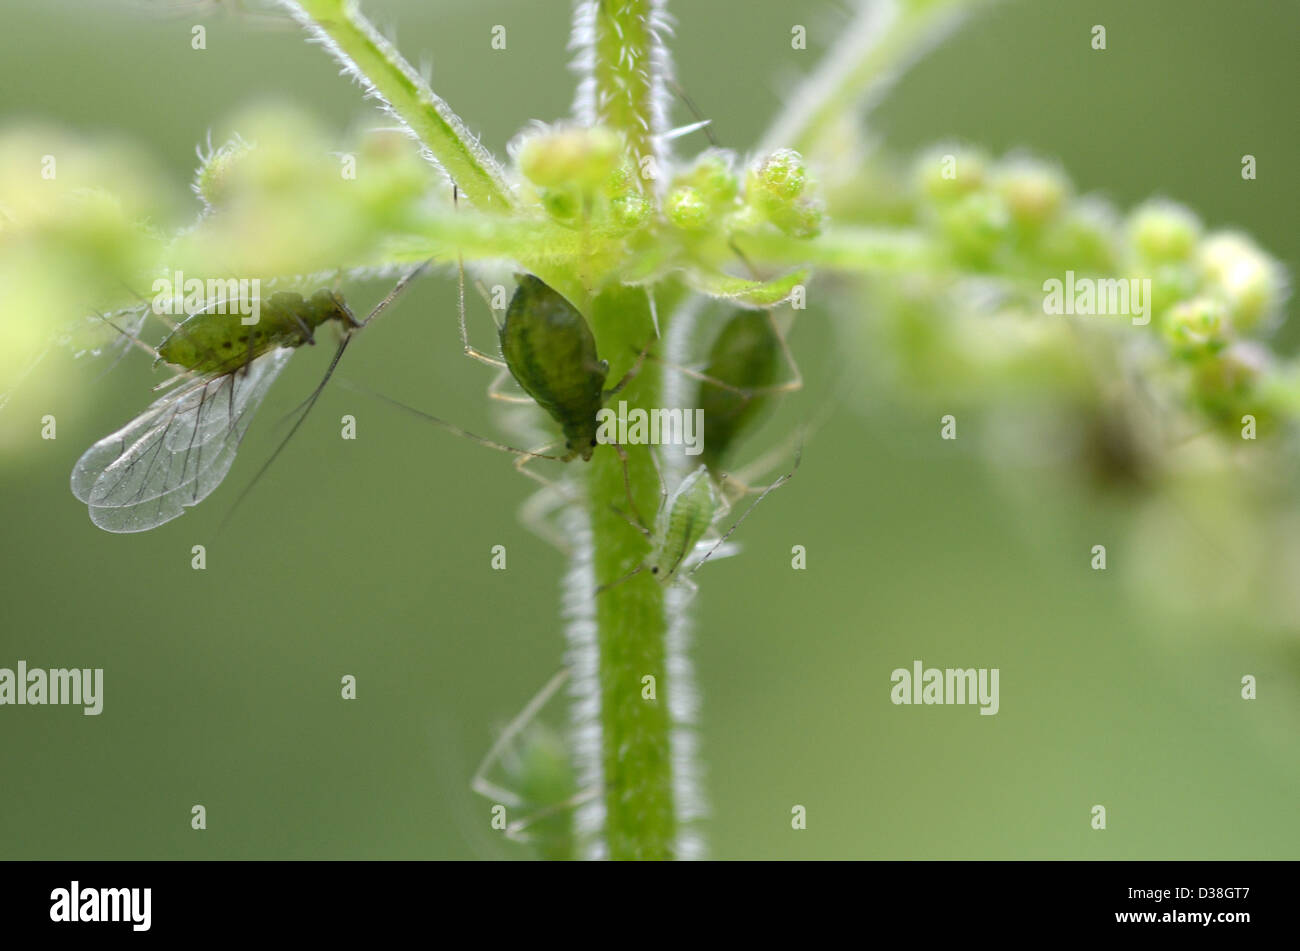 Blattläuse am Stamm der Pflanze, Blattläuse, Garten Schädling, Stockfoto